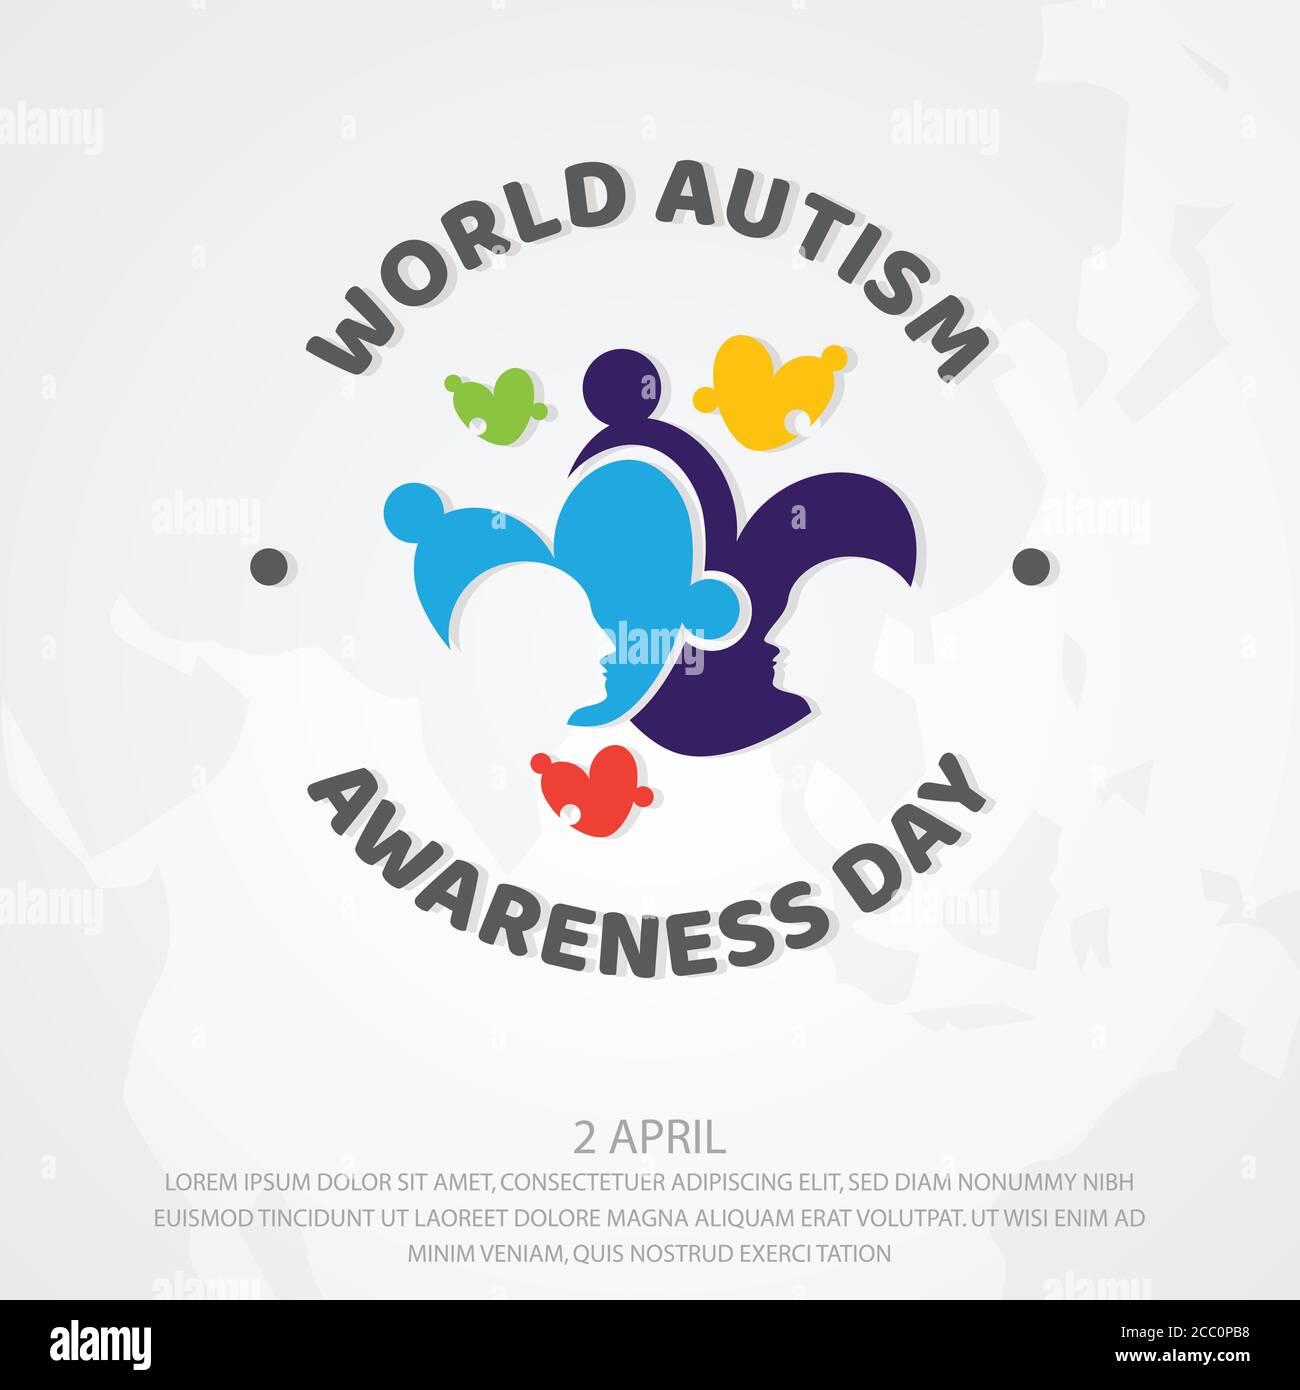 https://c8.alamy.com/comp/2CC0PB8/colorful-design-world-autism-awareness-day-with-puzzle-graphic-world-autism-awareness-day-for-banner-greeting-card-poster-or-background-design-elem-2CC0PB8.jpg